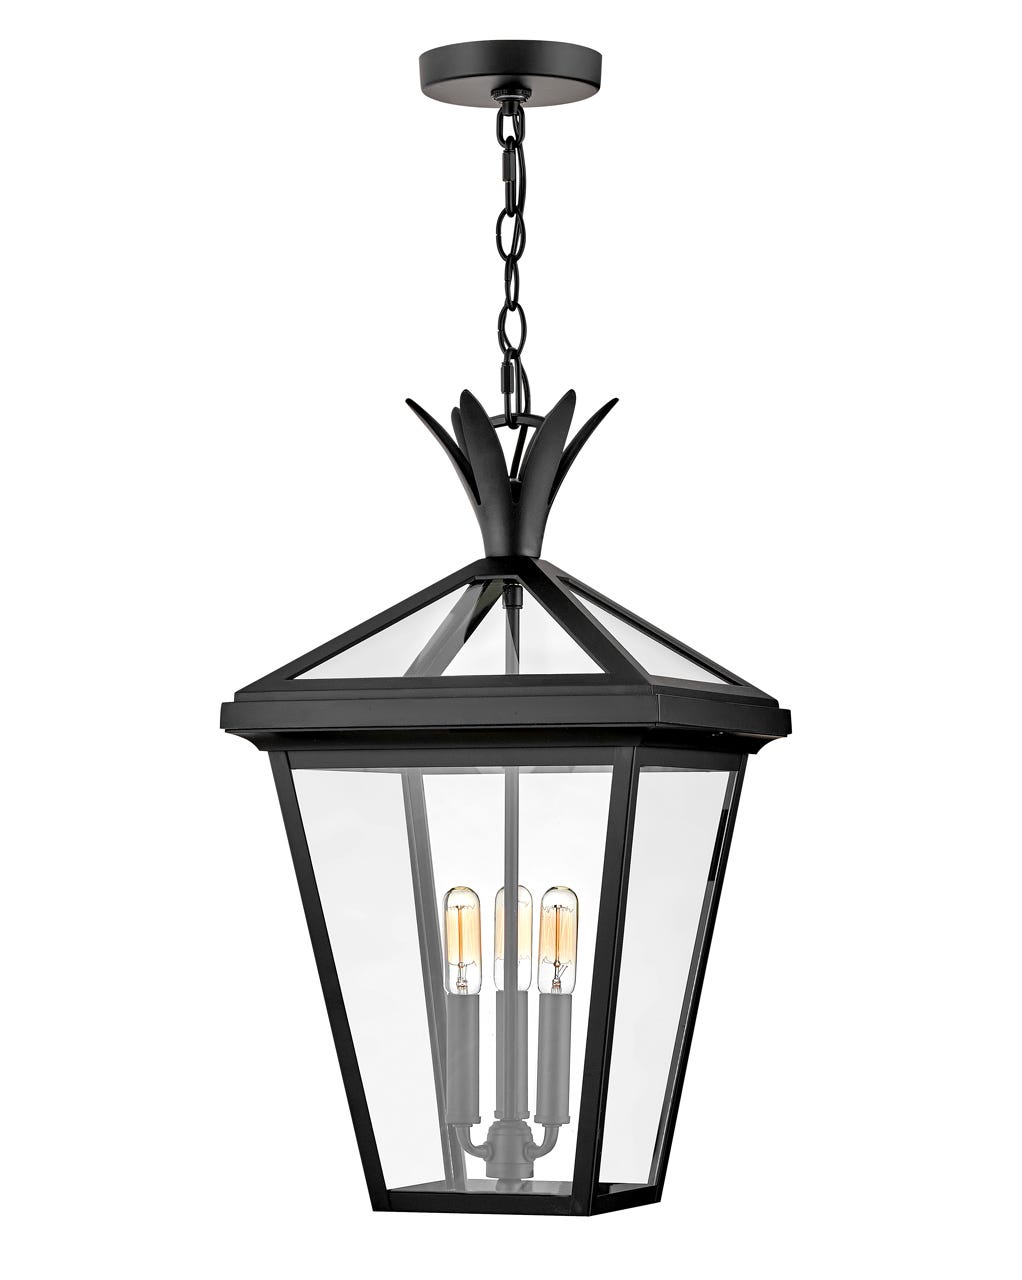 OUTDOOR PALMA Hanging Lantern Outdoor Light Fixture l Hanging Hinkley Black 12.0x12.0x21.5 